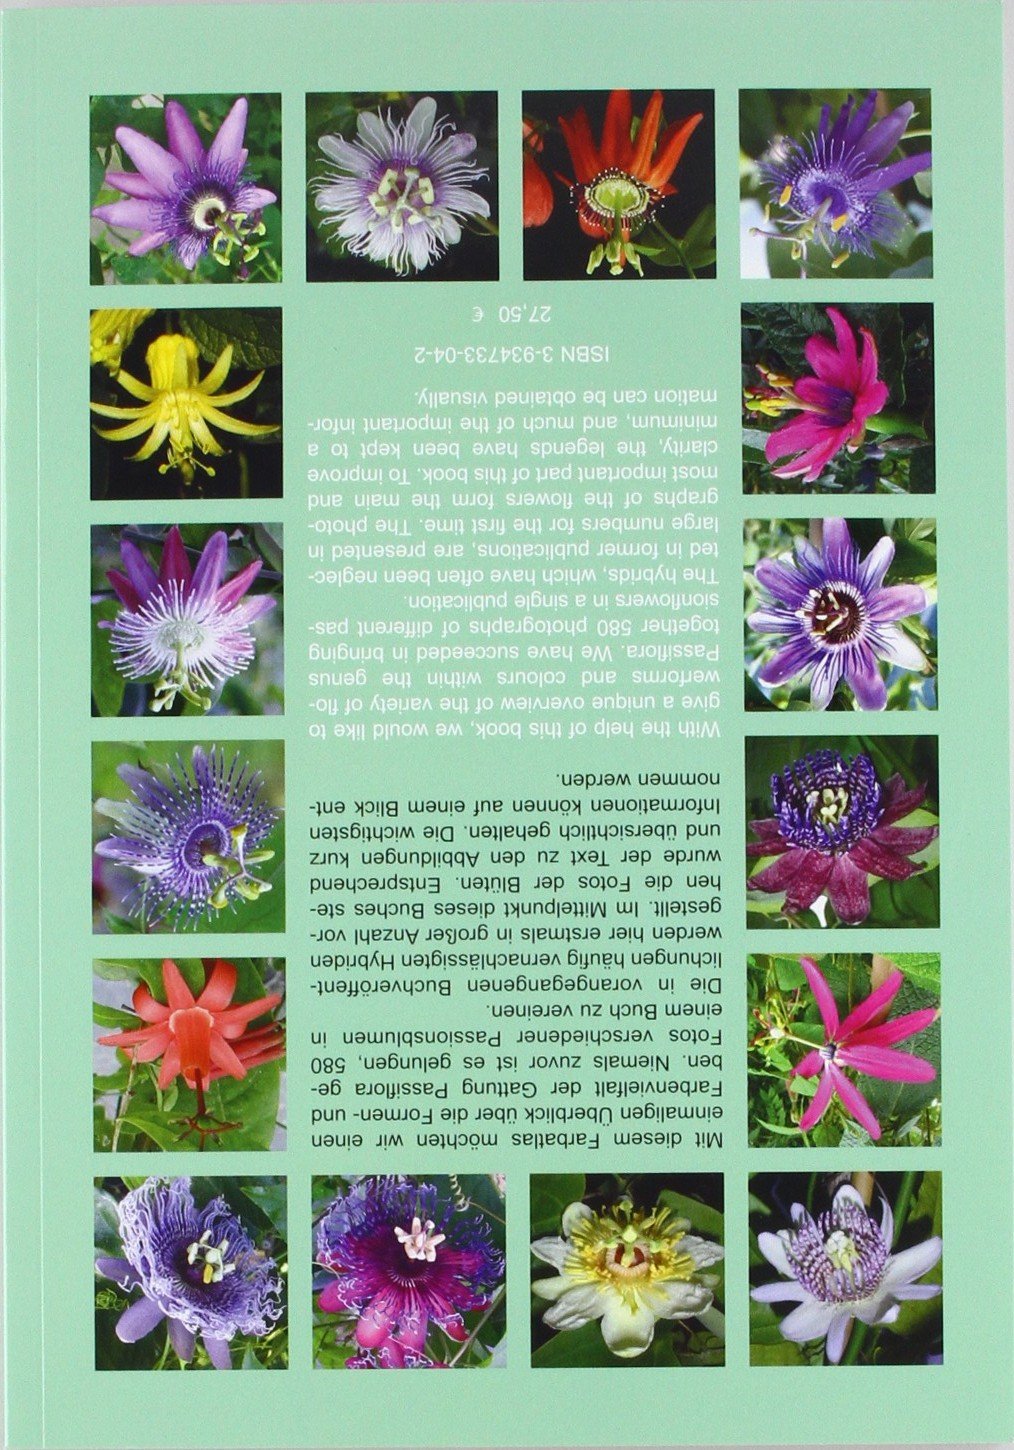 Farbatlas Passionsblumen /Colour Atlas Passionsflowers: Zweisprachige Ausgabe